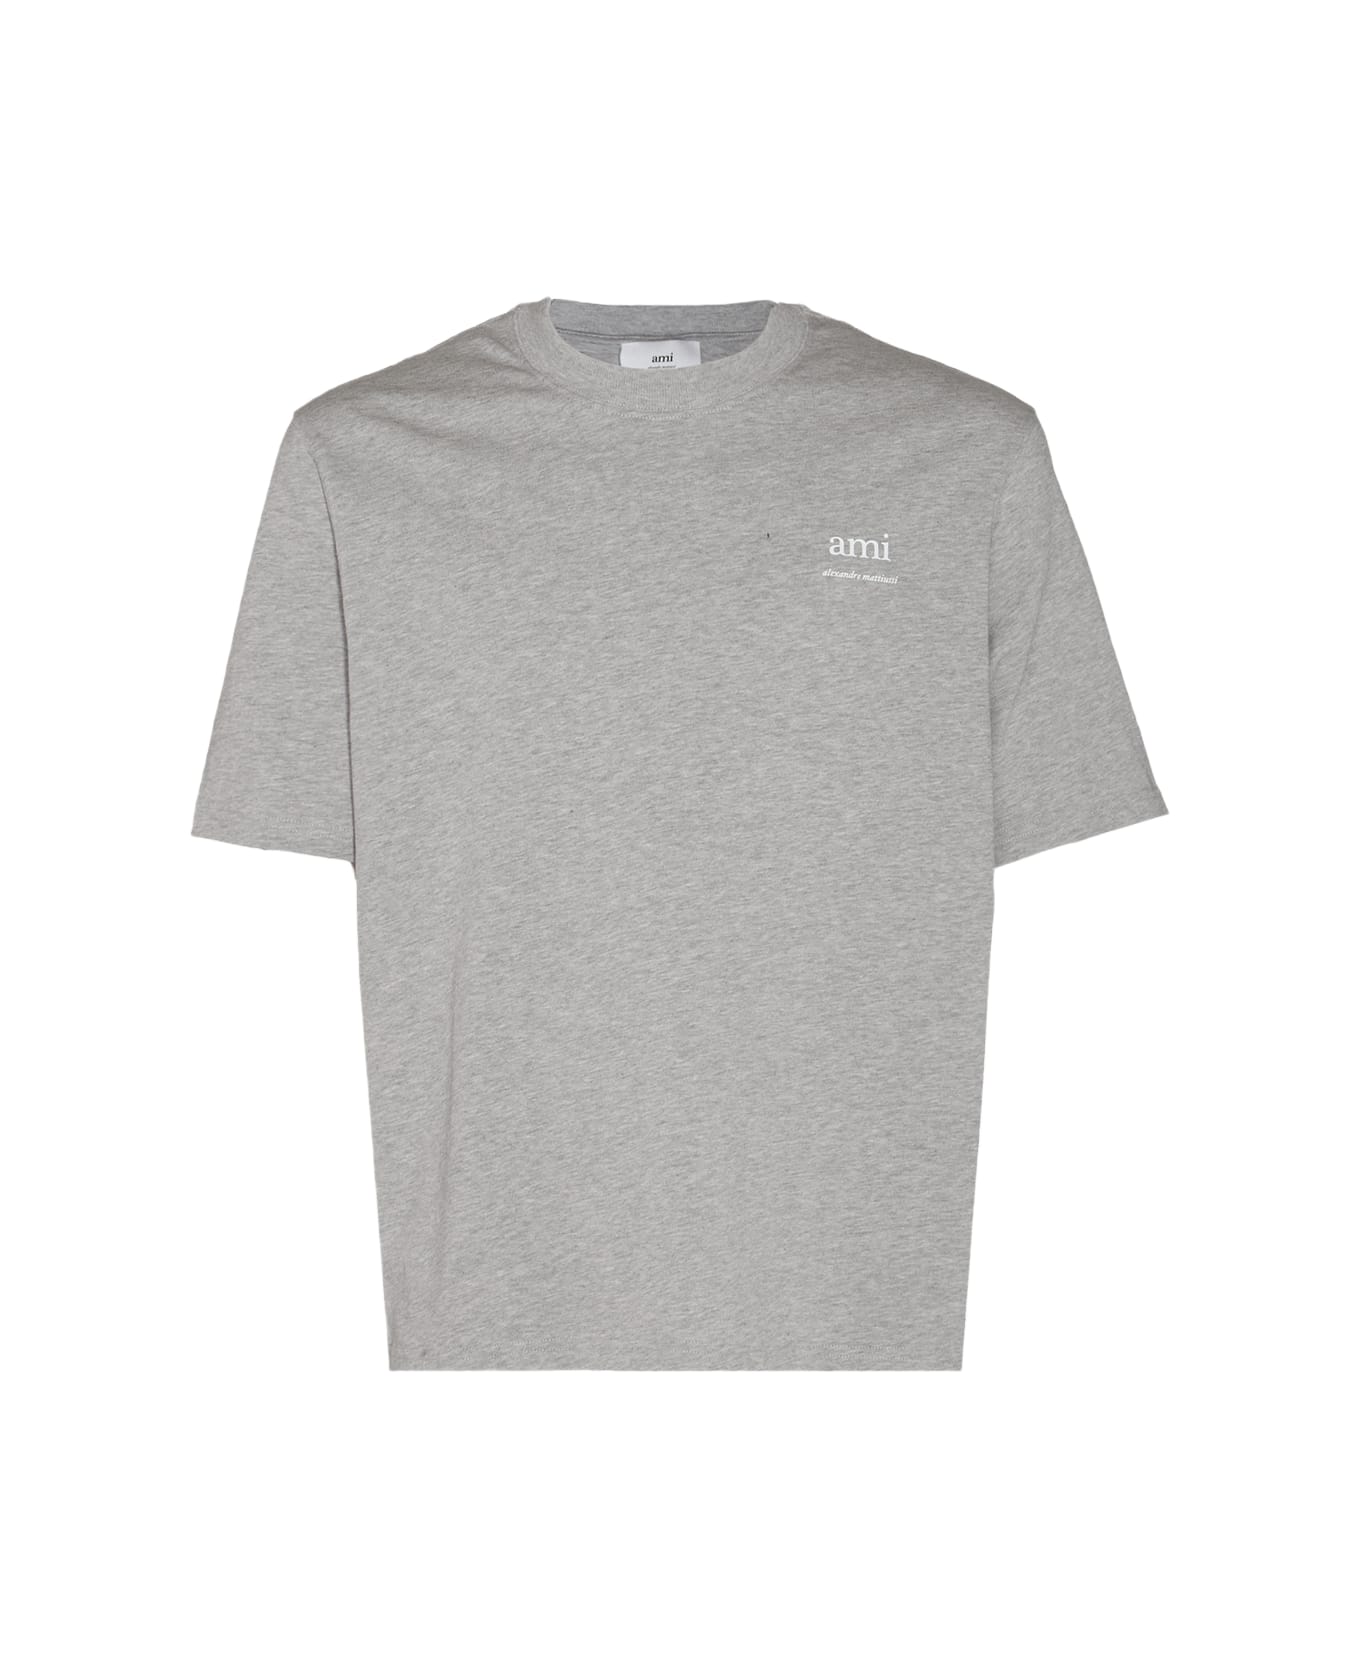 Ami Alexandre Mattiussi Grey Cotton T-shirt - HEATHER ASH GREY Tシャツ